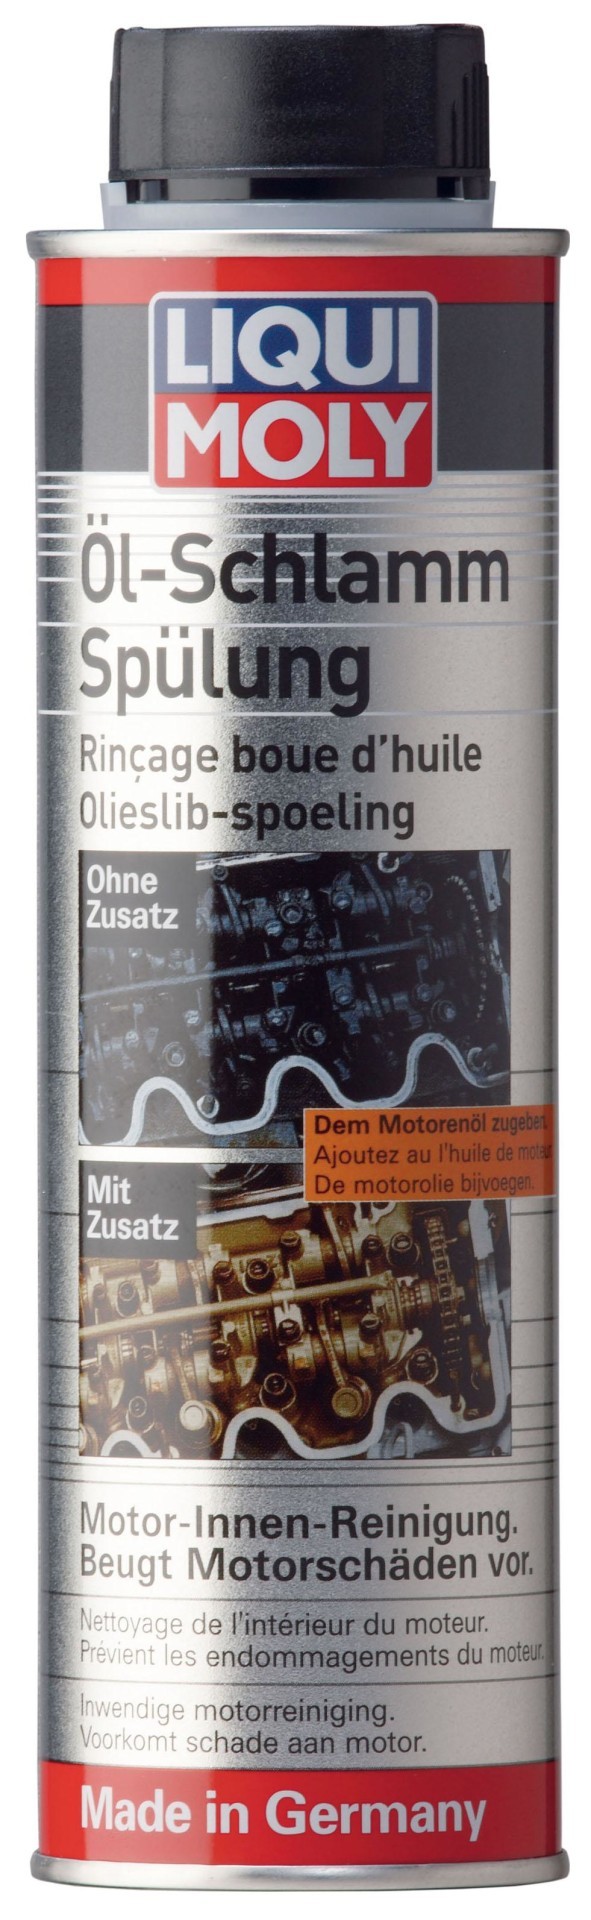 LIQUI MOLY Additiv "l-Schlamm-Splung (300 ml)", Art.-Nr. 5200